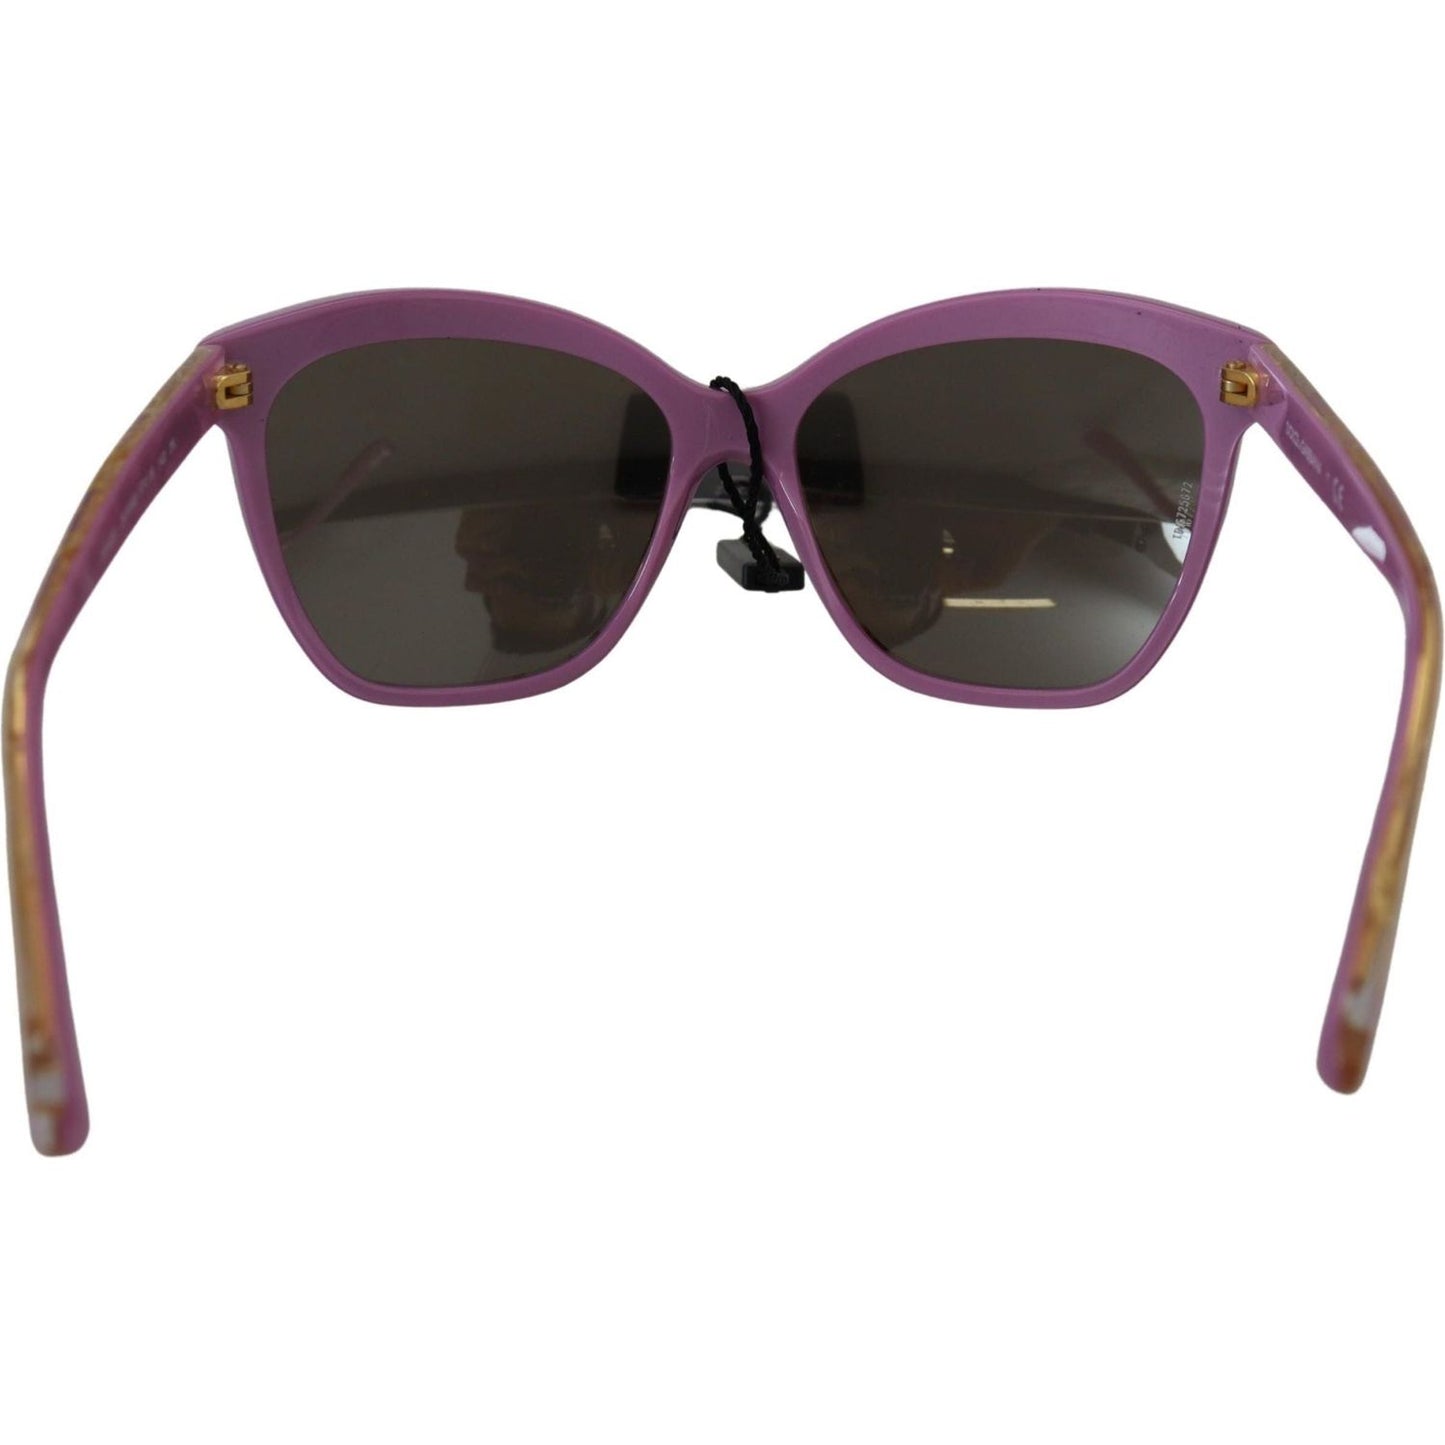 Dolce & Gabbana Elegant Violet Acetate Sunglasses violet-full-rim-rectangle-frame-shades-dg4251-sunglasses IMG_5187-scaled-228a4b20-90b.jpg